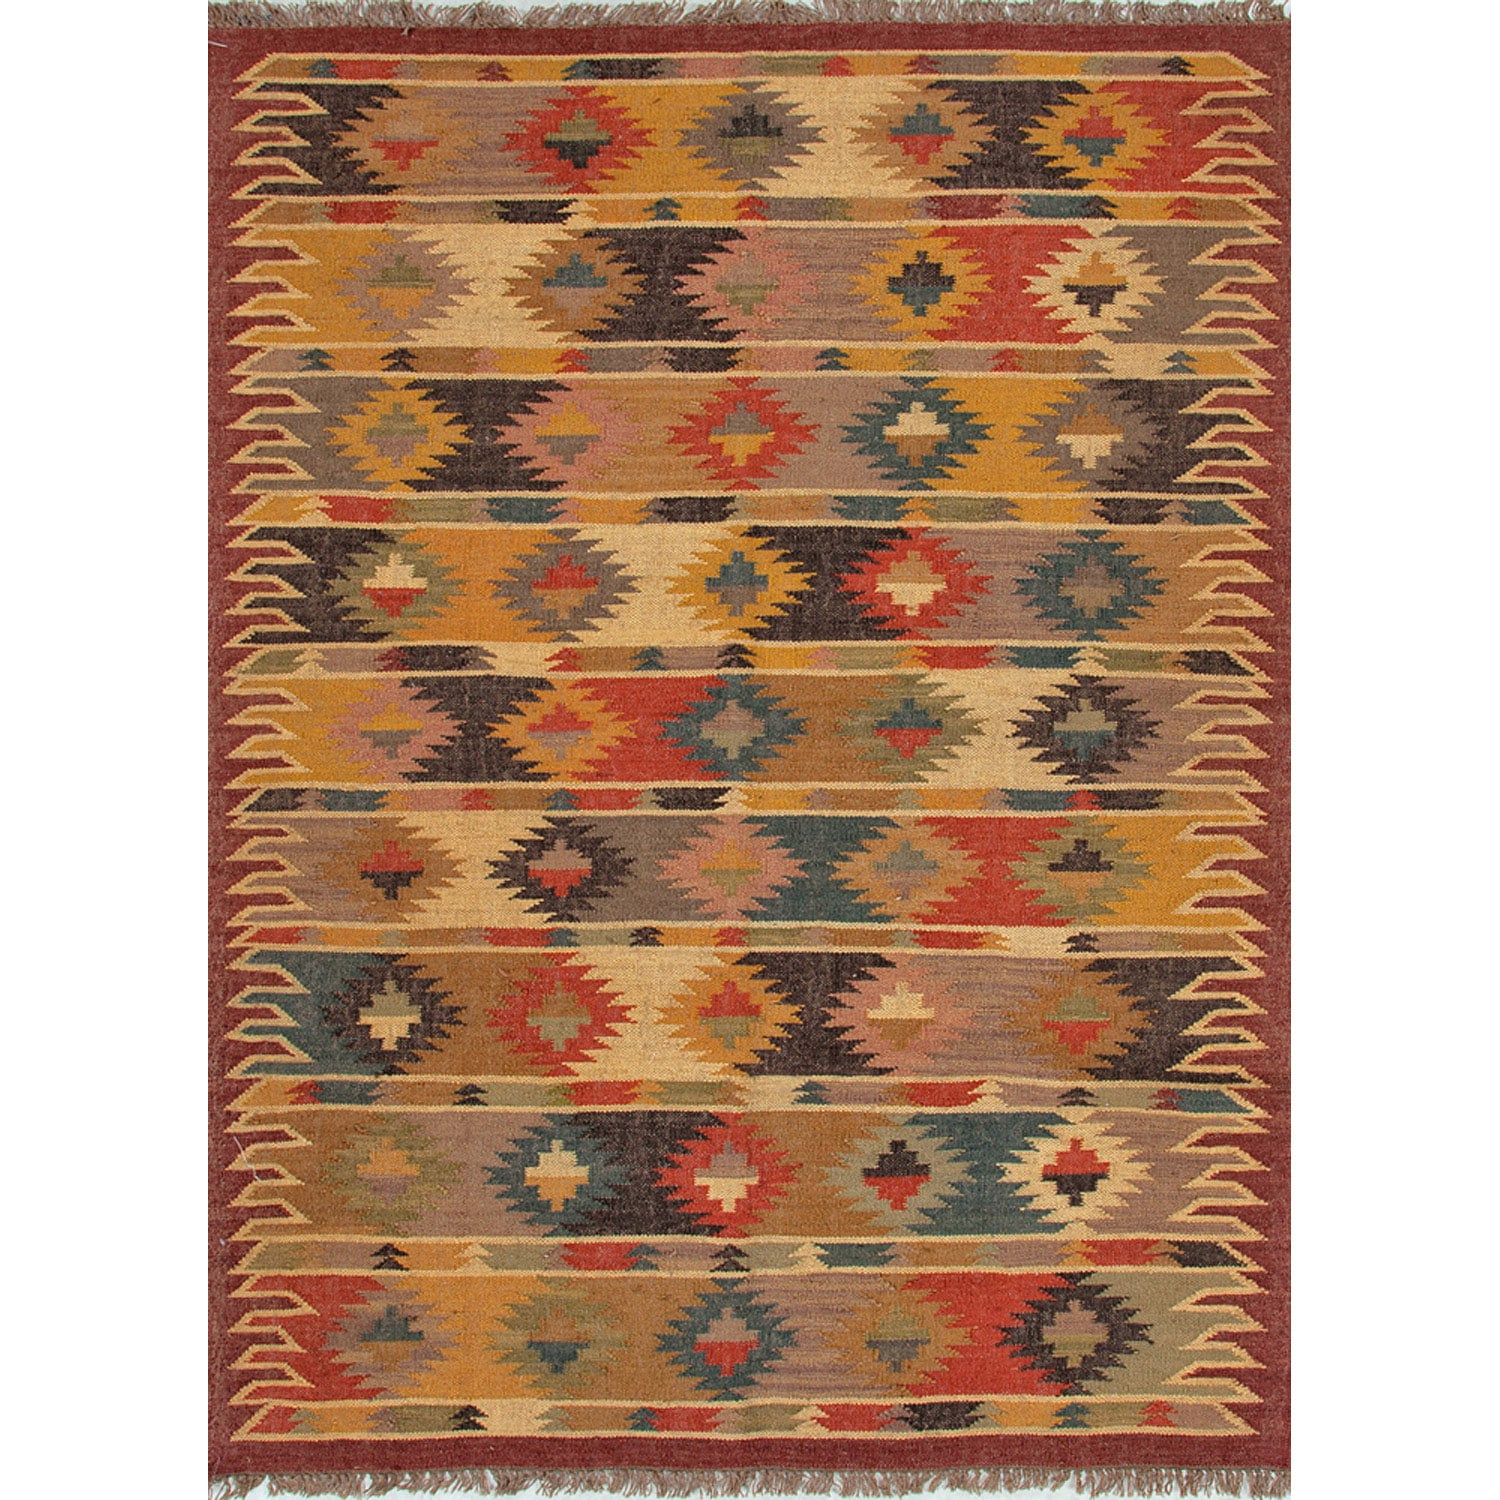 Handmade Flatweave Tribal Pattern Multi colored Area Rug (2 X 3)